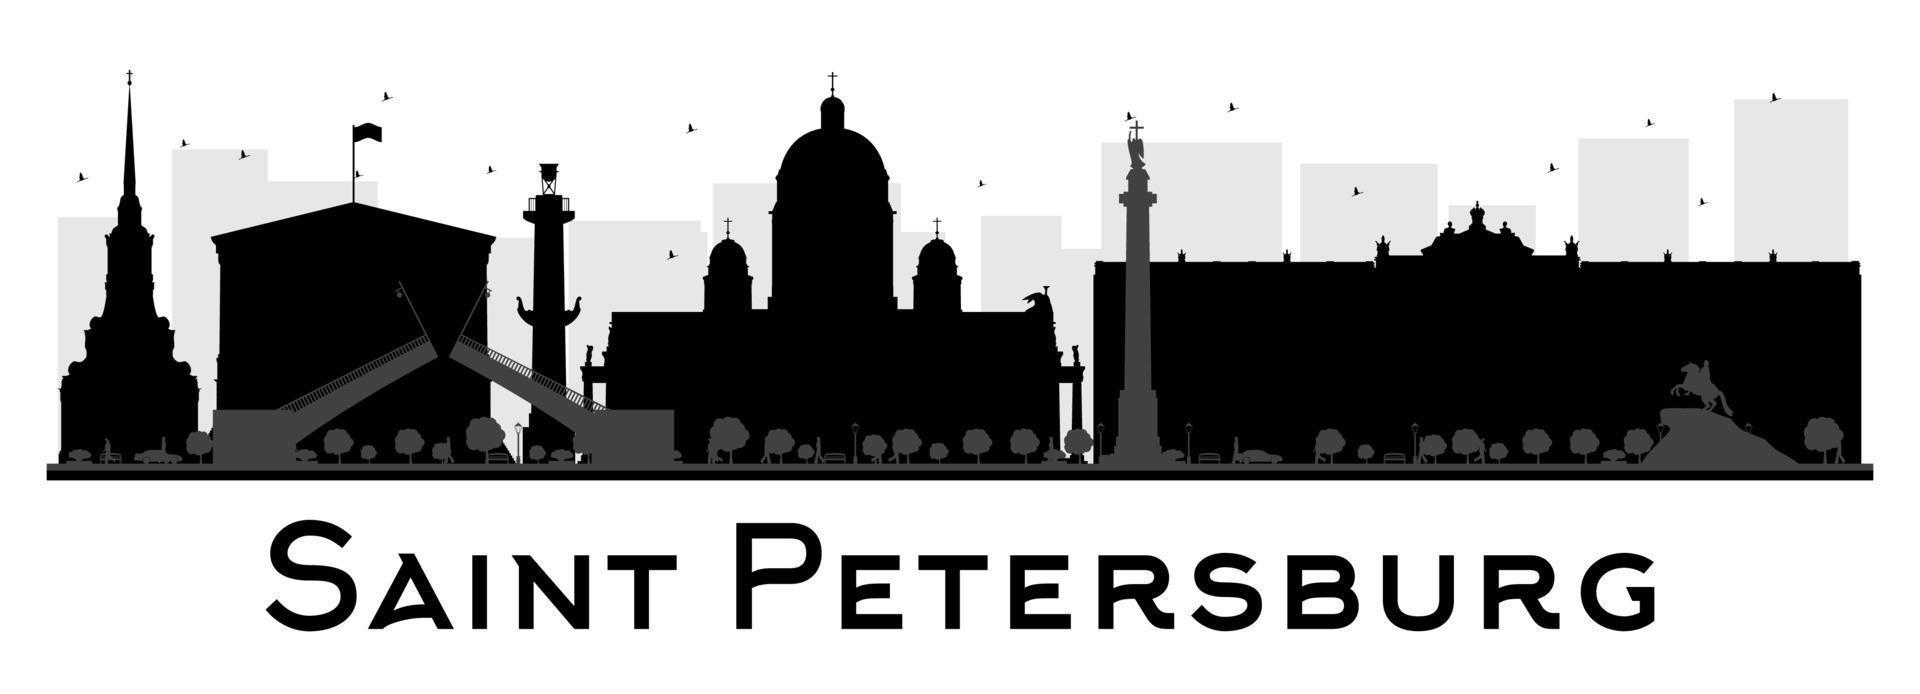 Sint-petersburg stad skyline zwart-wit silhouet. vector